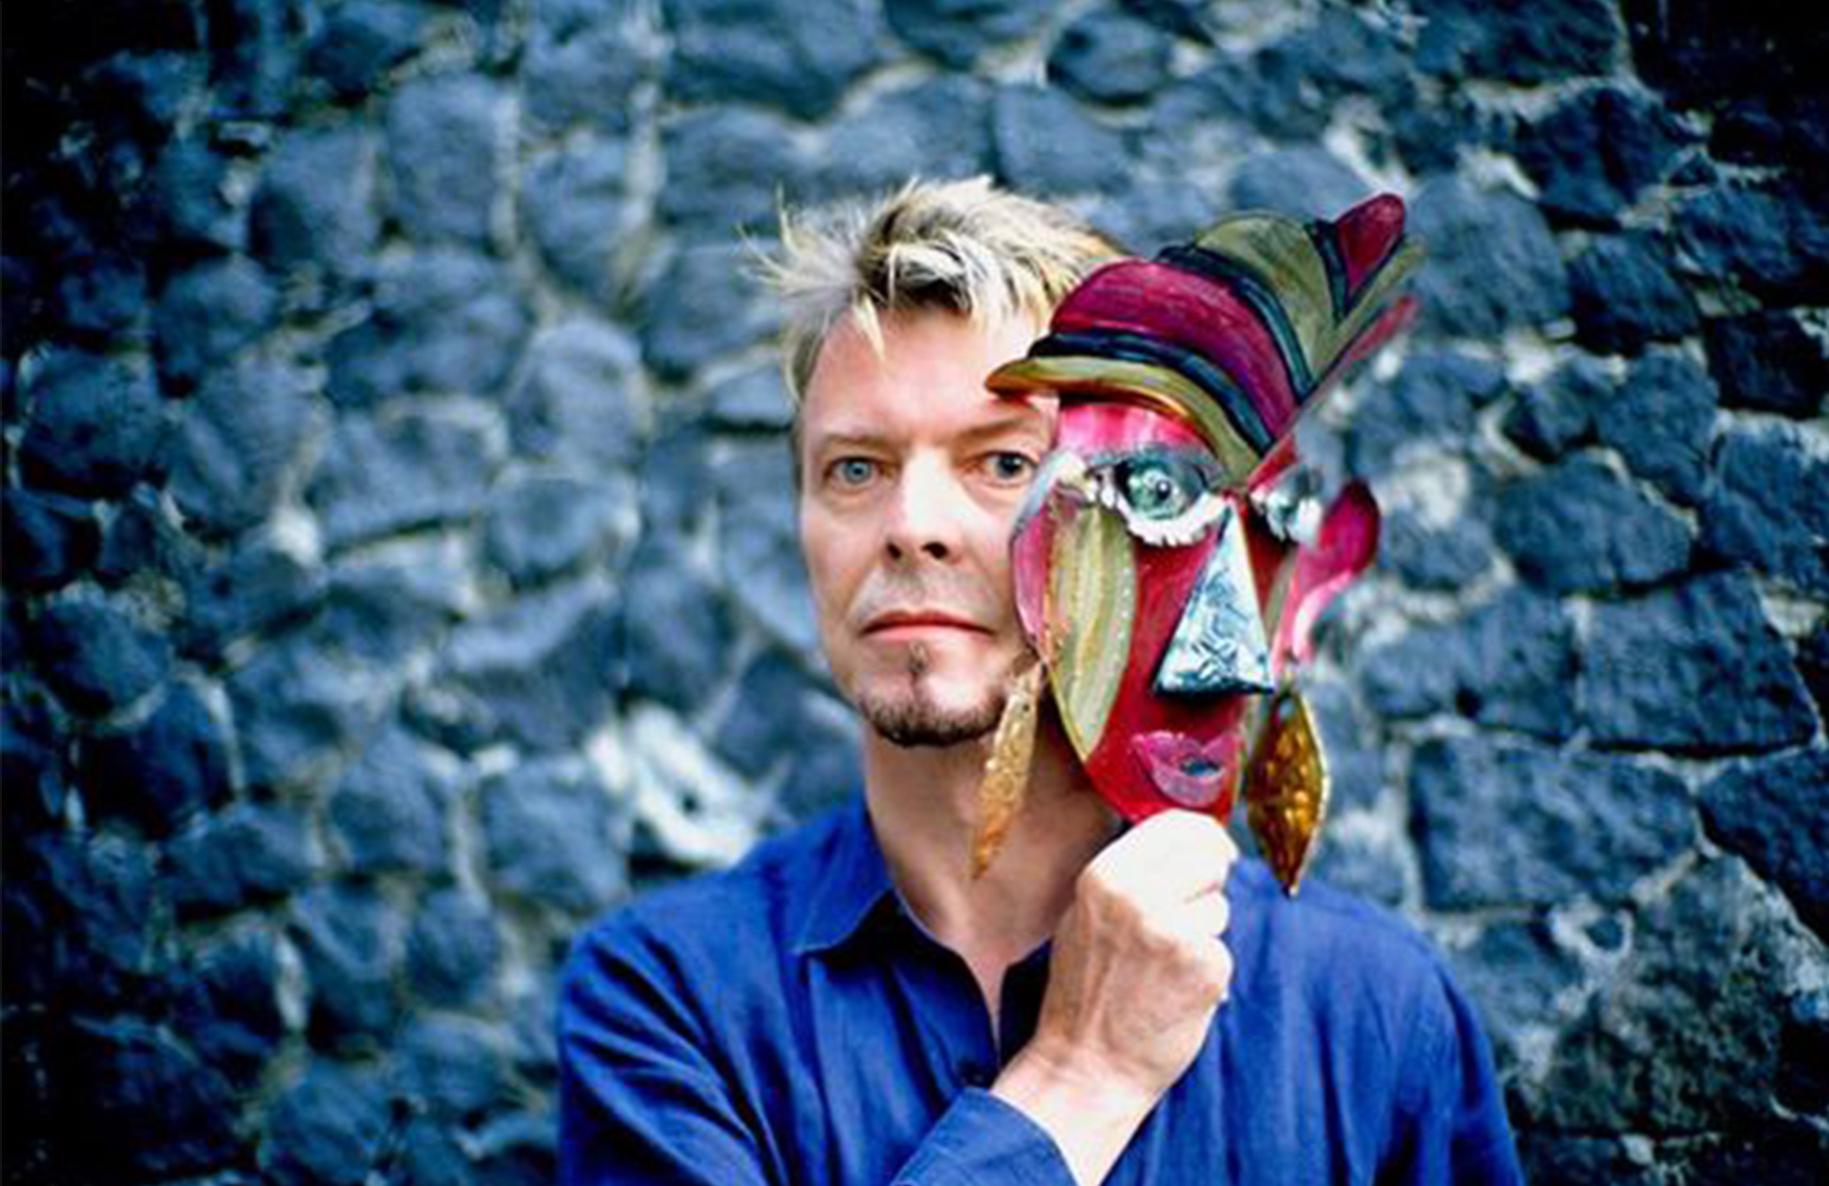 Fernando Acevez Color Photograph - David Bowie at Frida Kahlo's House